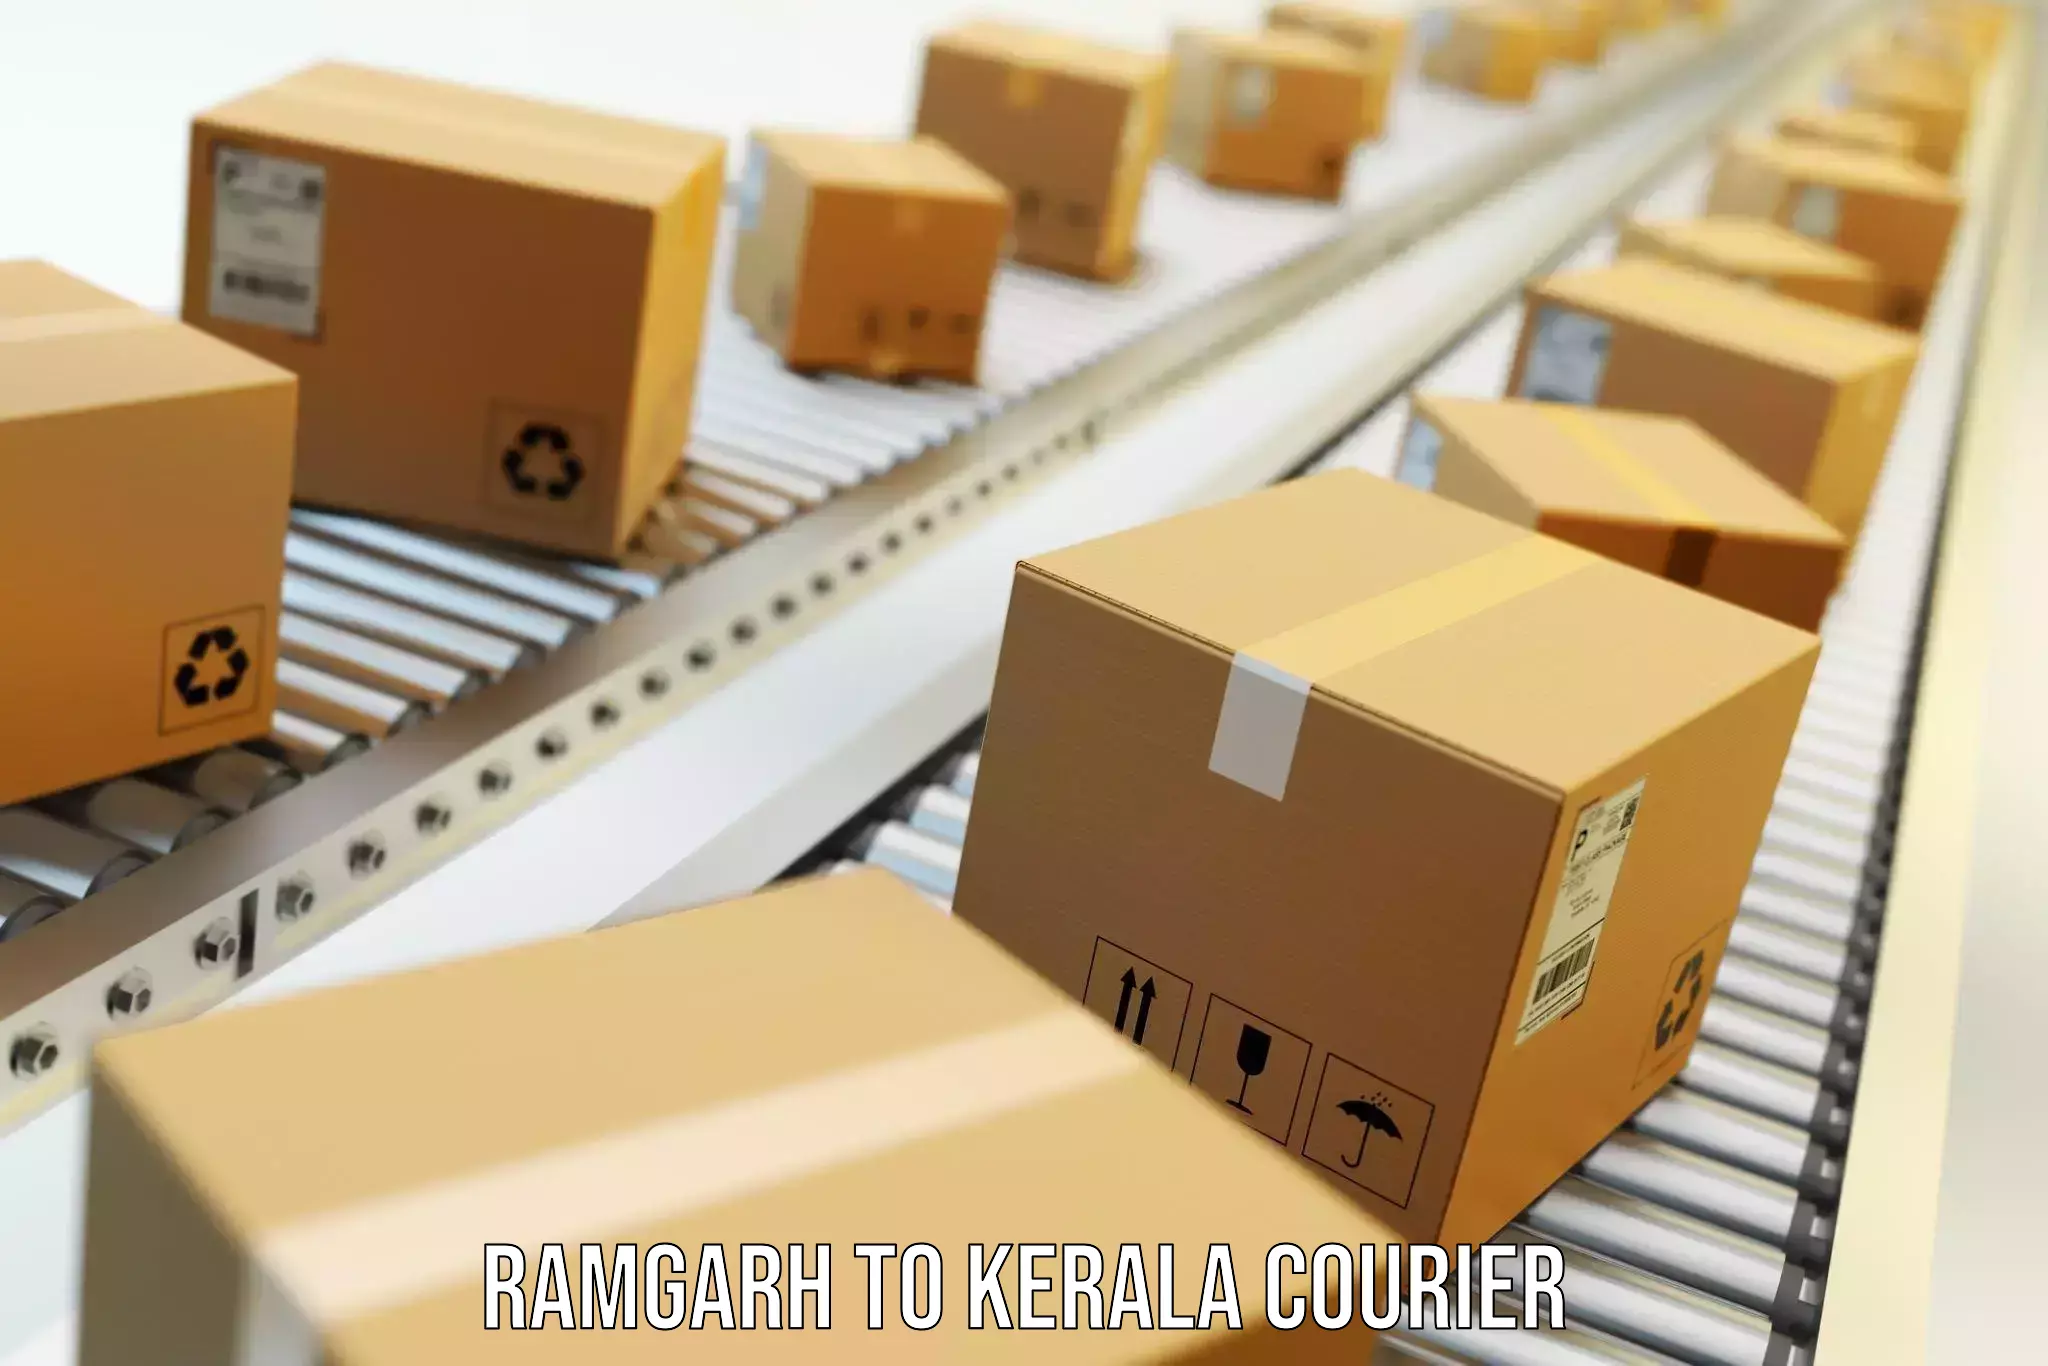 Furniture delivery service Ramgarh to Kattappana